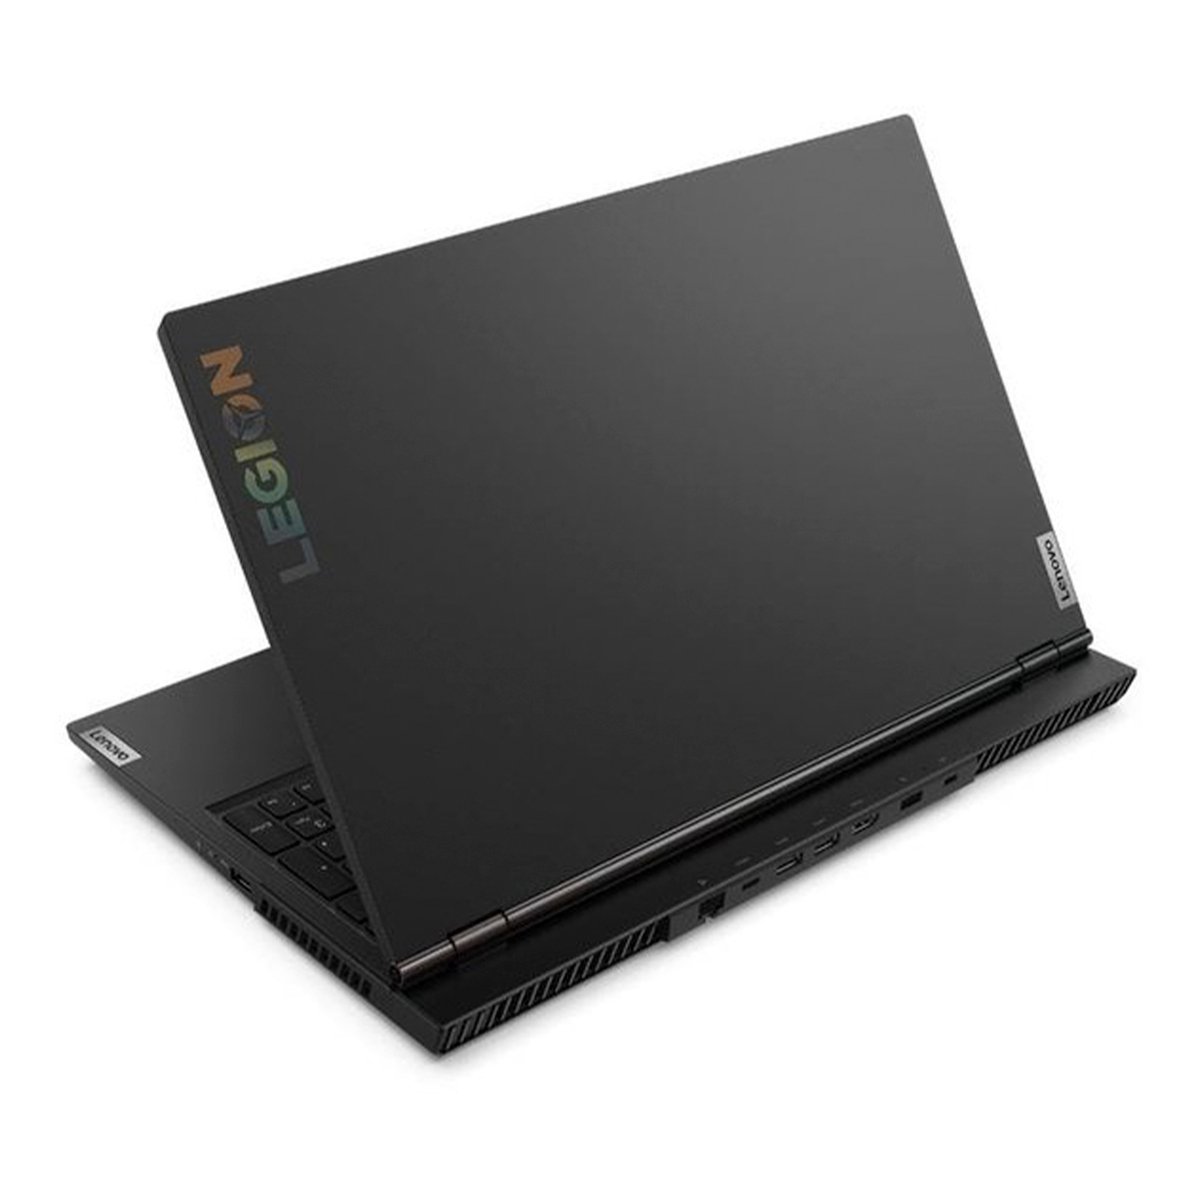 Lenovo Legion 5 (81Y6009KAX) Gaming Laptop, 15.6" FHD, 10th-Gen Intel Core i7-10750H,16GB RAM, 1TB HDD,256GB SSD NVIDIA GeForce GTX 2060 6GB Graphics, Windows 10,Black